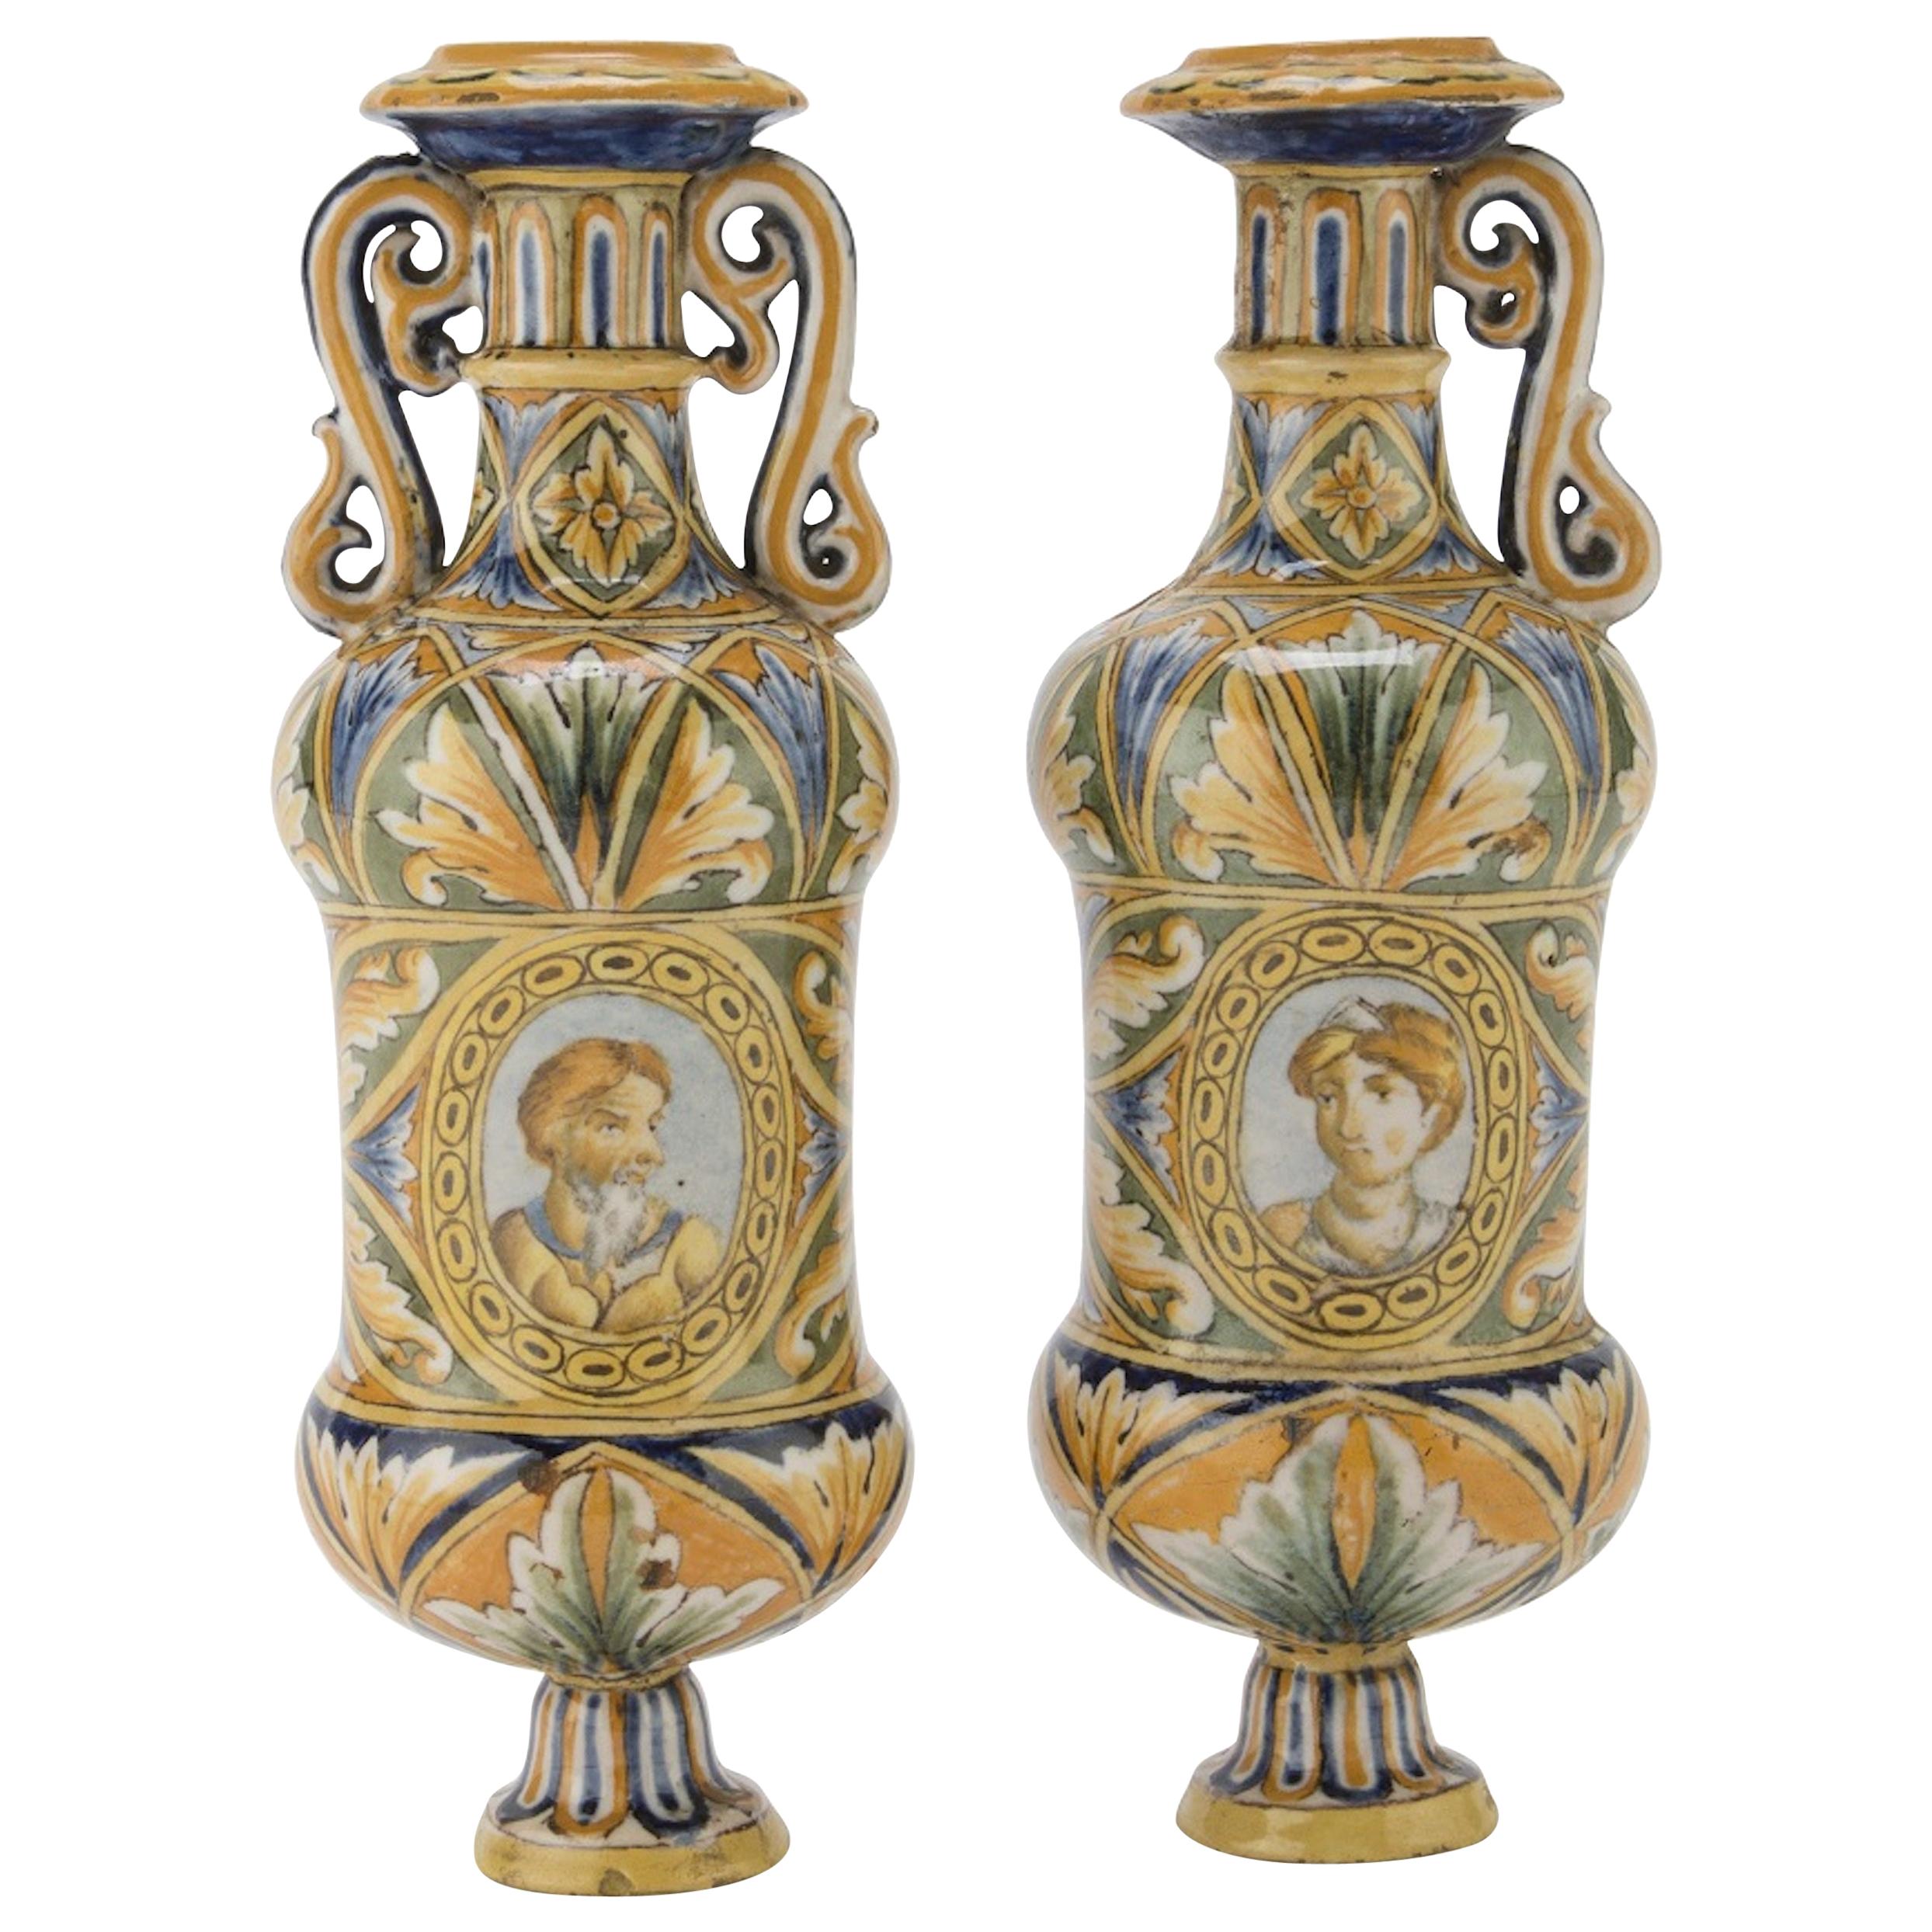 Pair of Ceramic Jugs by Italian School, 19th Century